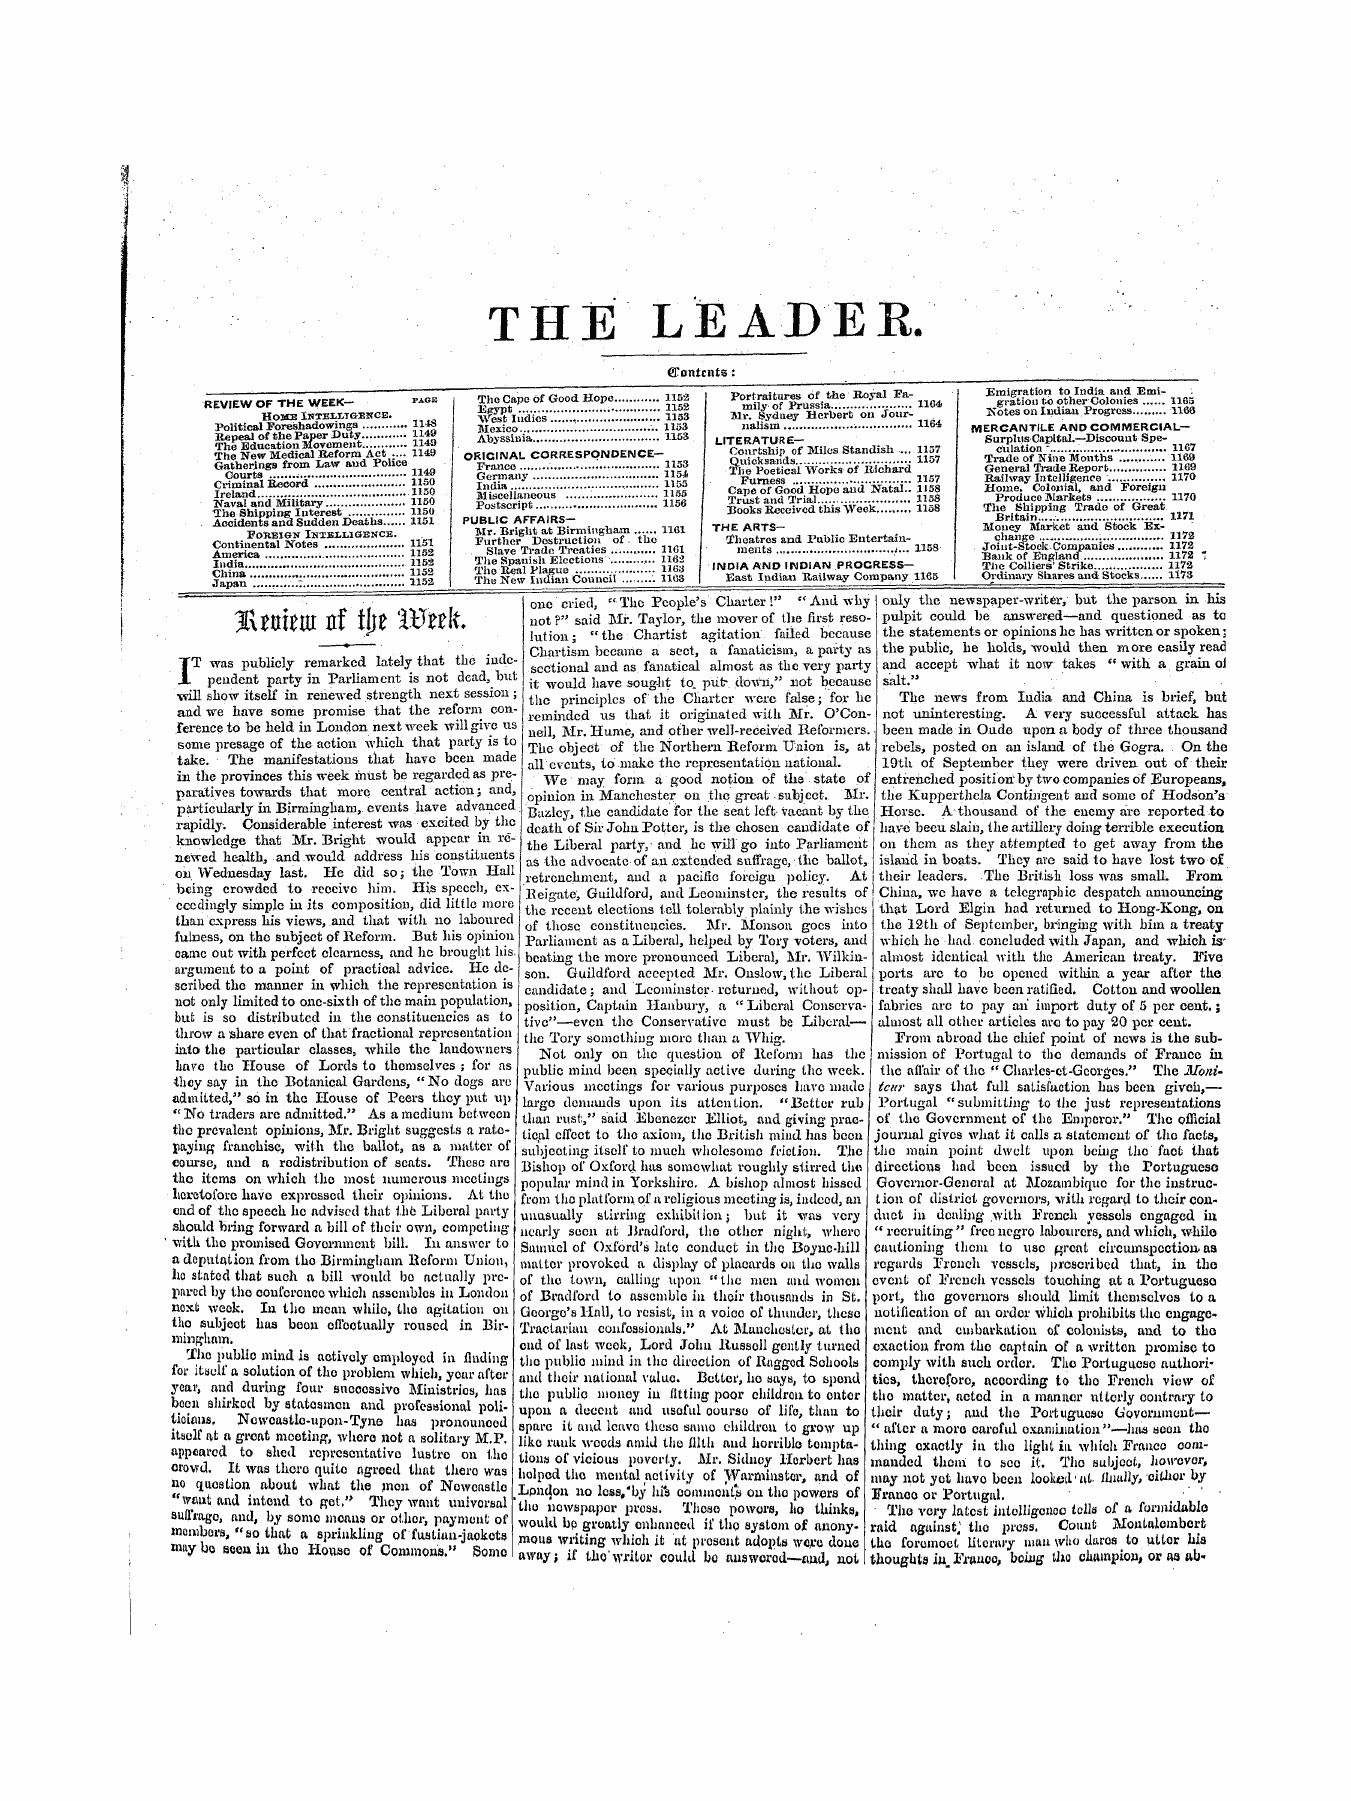 Leader (1850-1860): jS F Y, 1st edition - (•Tontents: - ¦ ' ' ¦